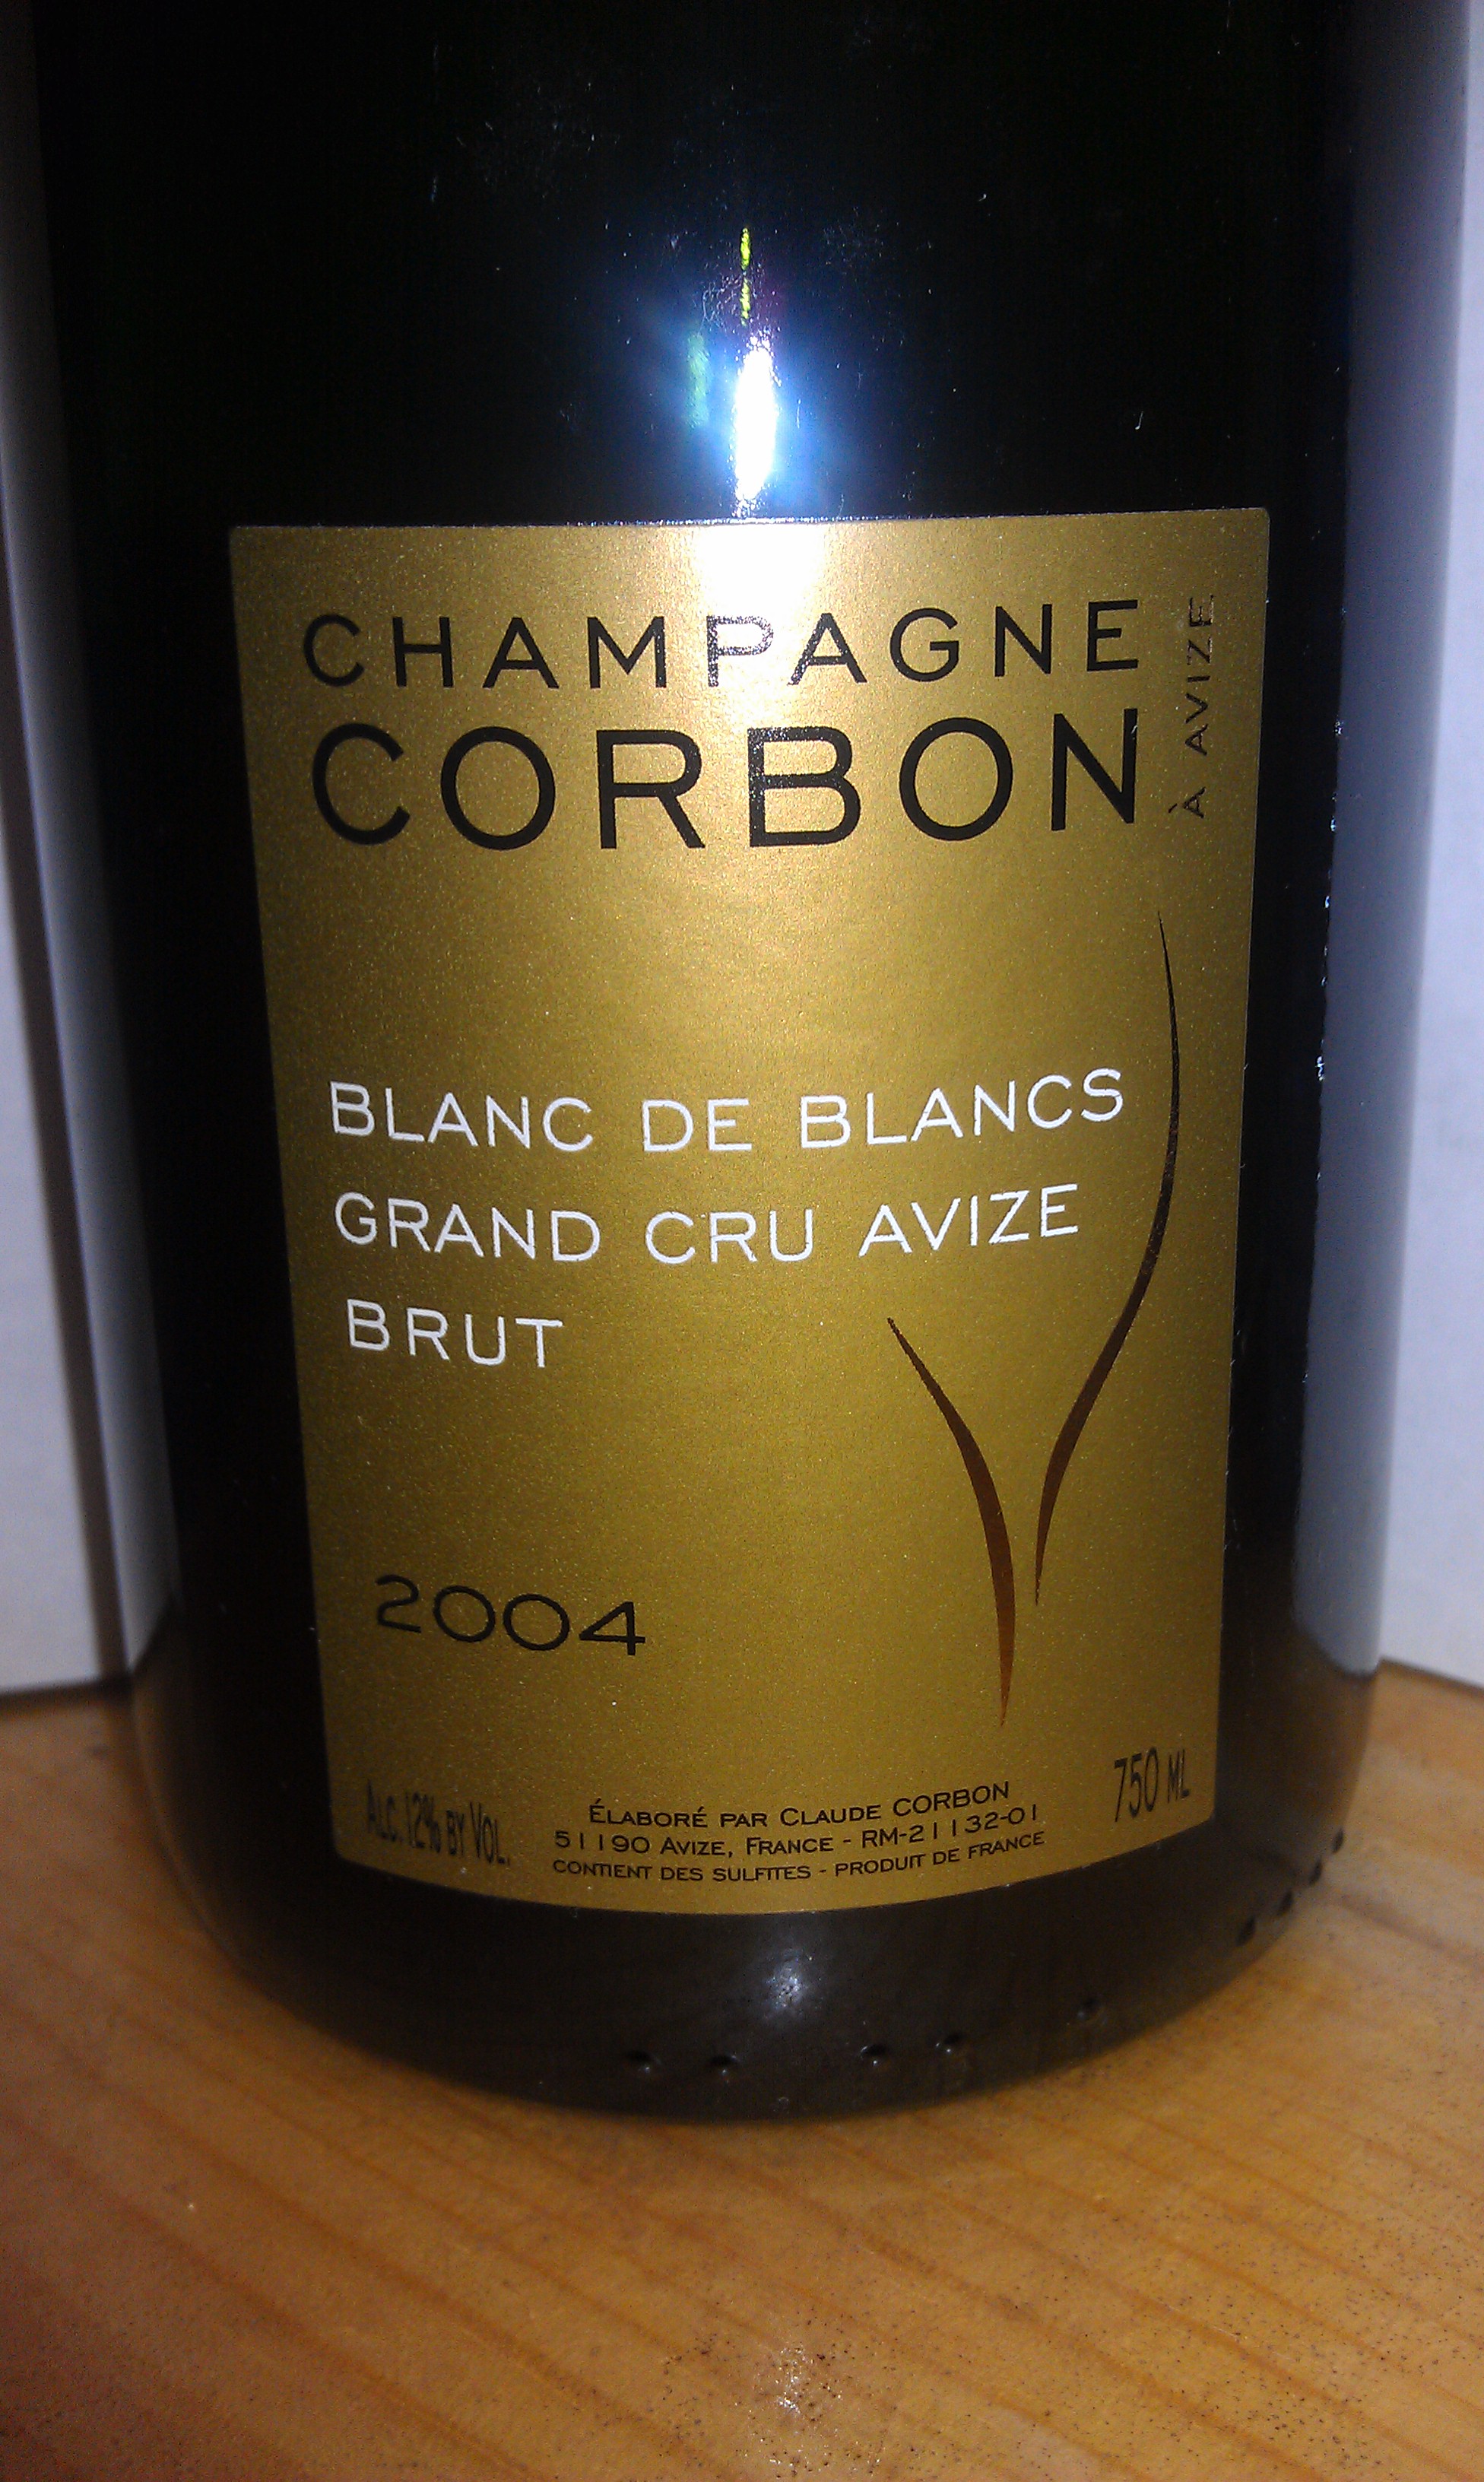 2006 Claude Corbon Blanc de Blanc Grand Cru Avize Brut Champagne - click image for full description